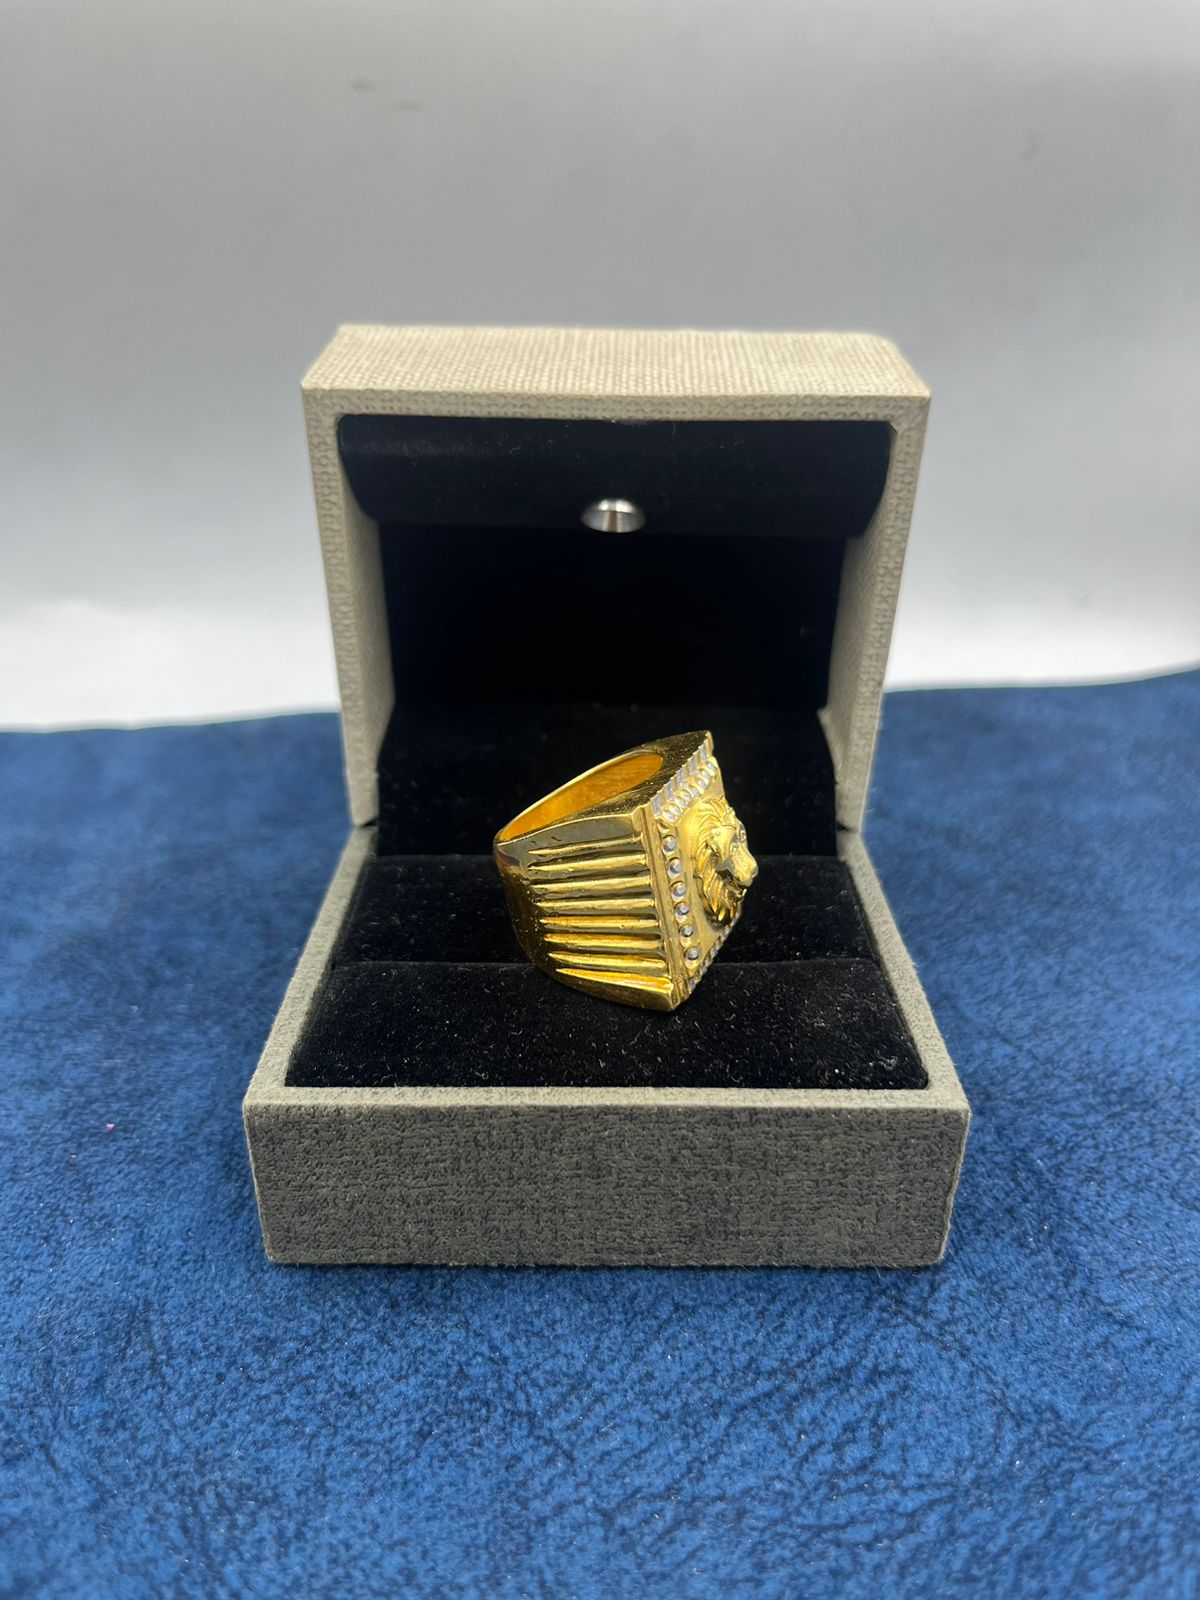 Seal Ring Men's Ring 333 Gold - Size 55 - 12,10 Gram | eBay